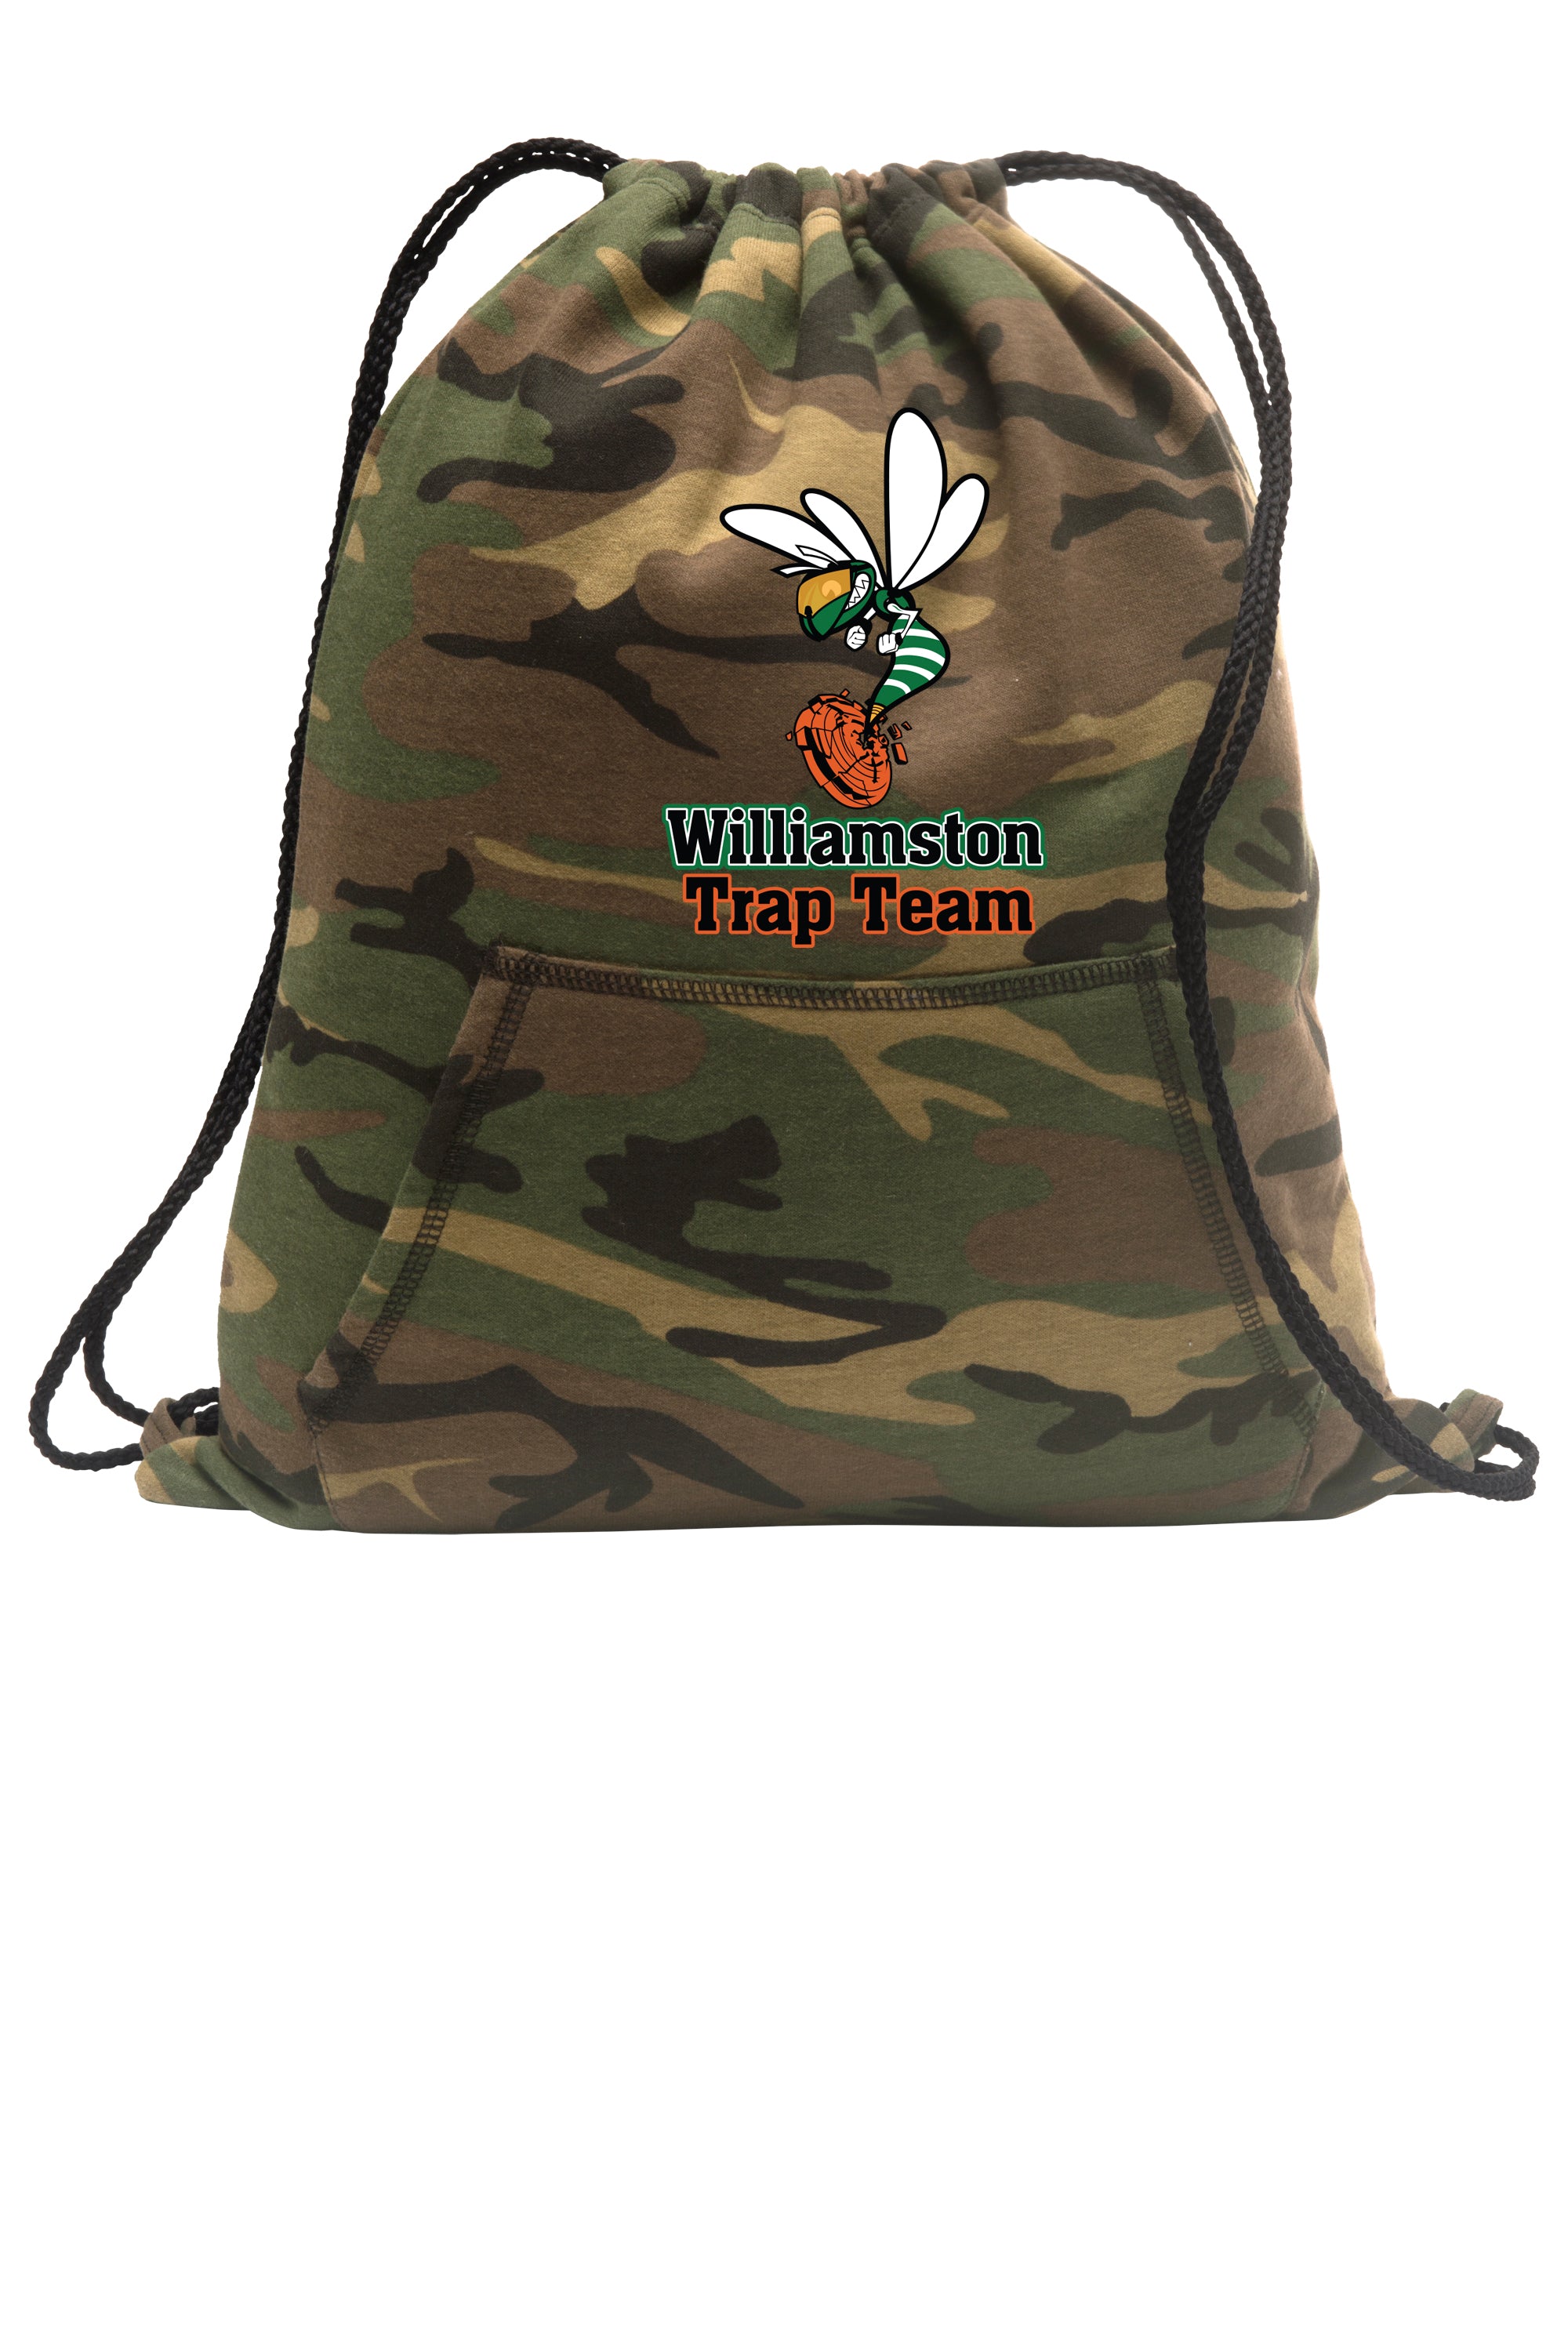 Williamston Trap Team - Camo Drawstring Bag